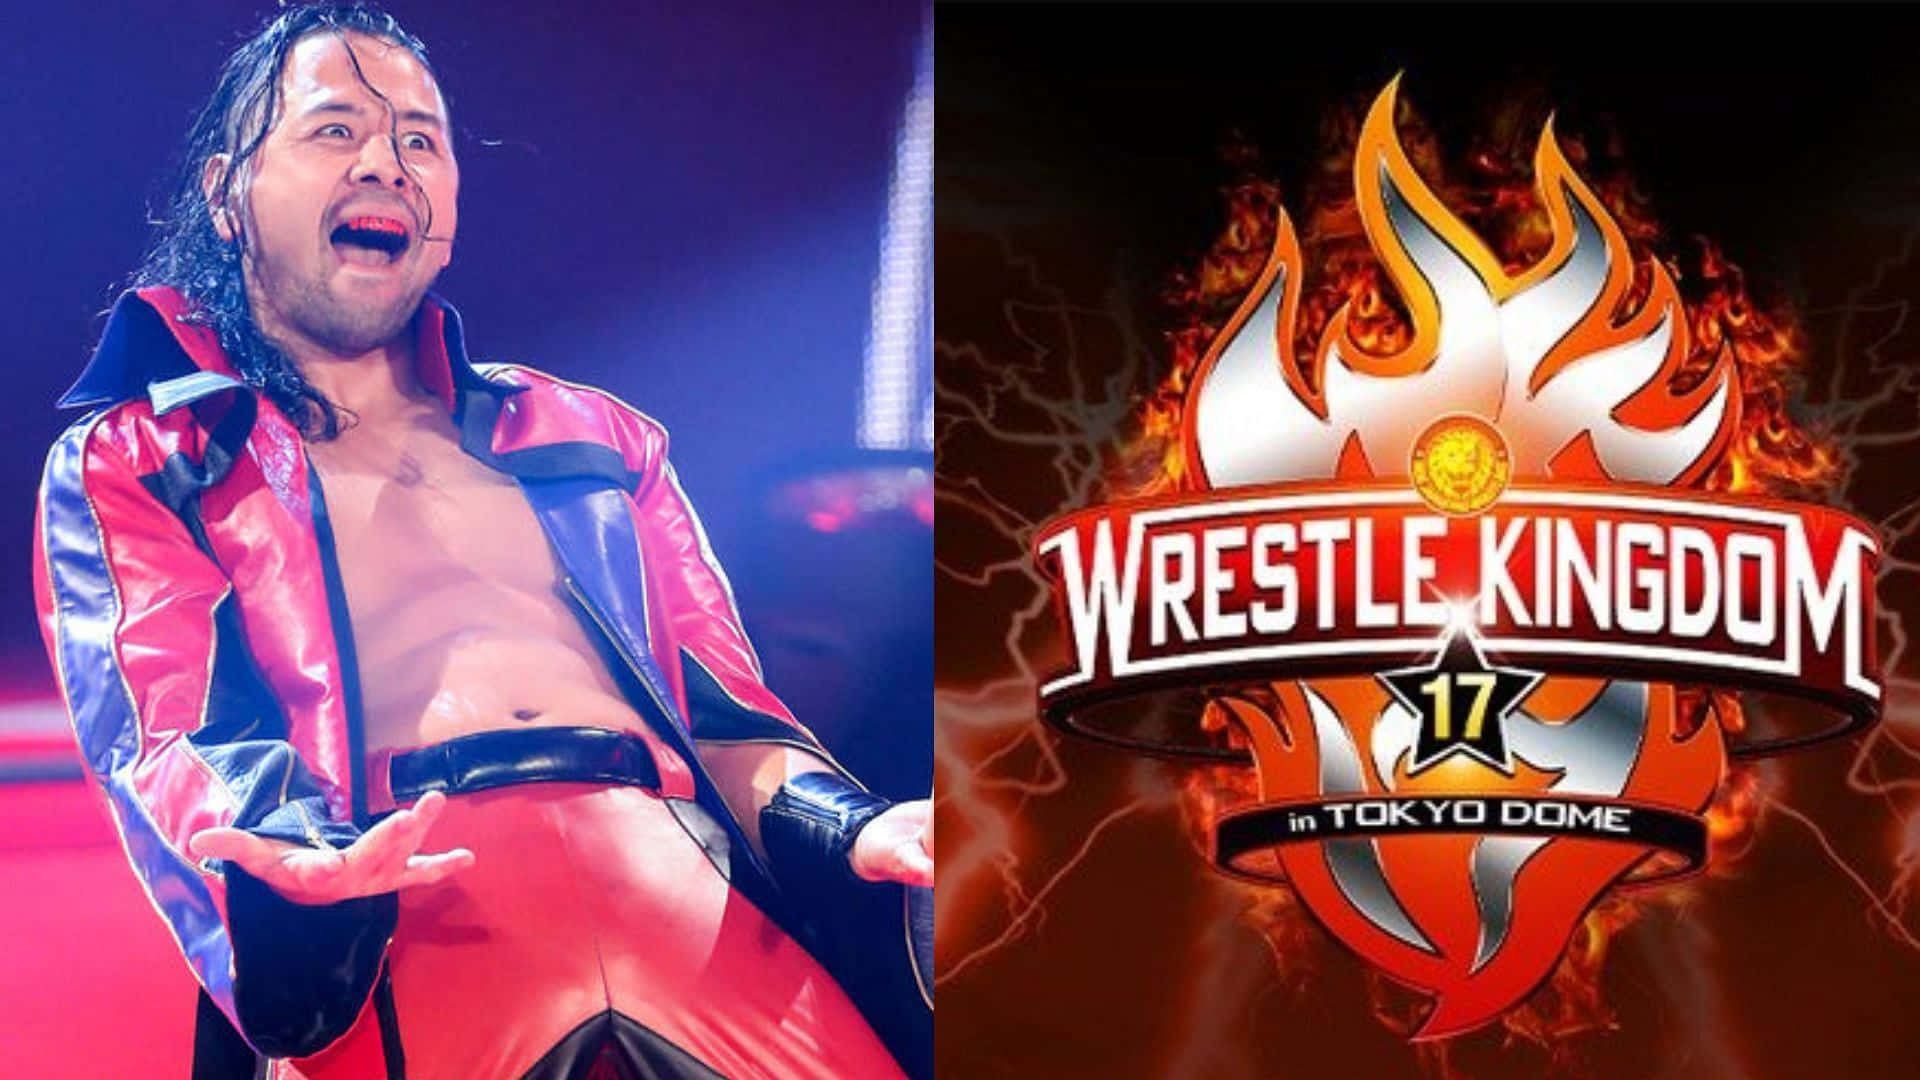 Shinsuke Nakamura wrestling at Wrestle Kingdom 17 in Tokyo Dome Wallpaper